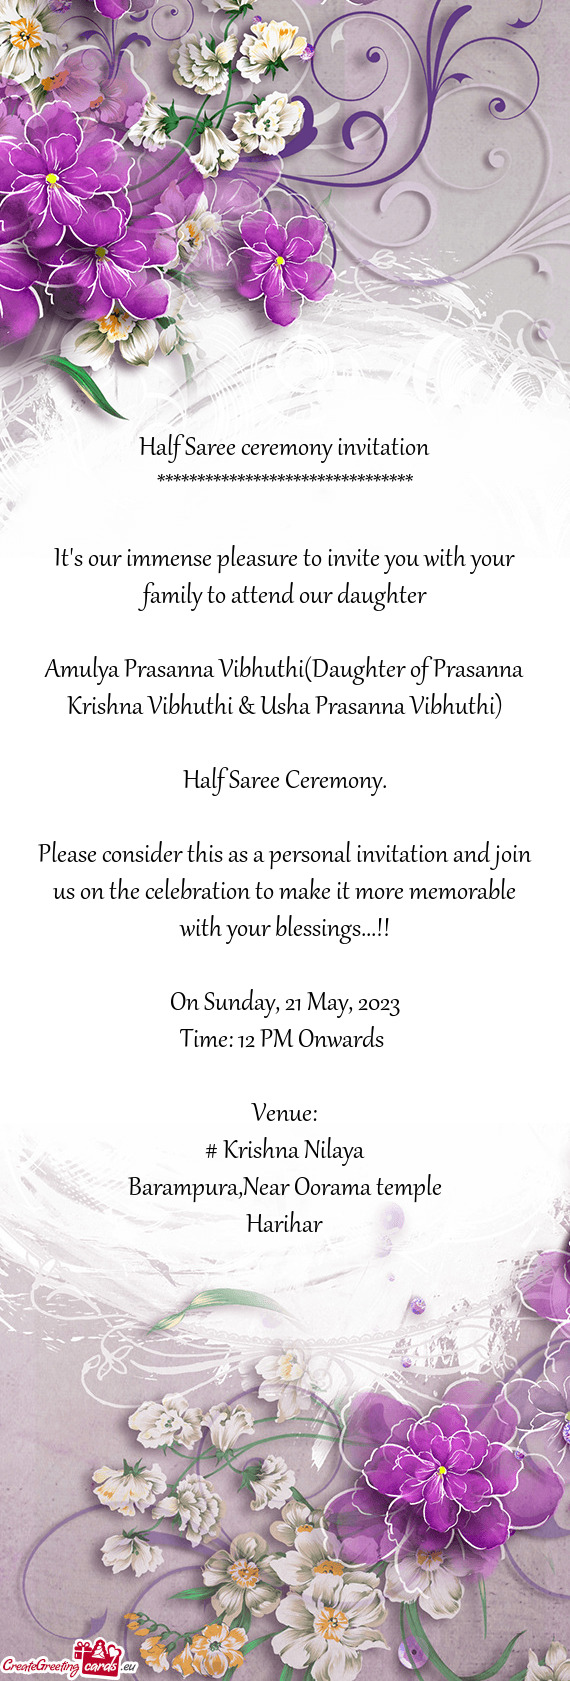 Amulya Prasanna Vibhuthi(Daughter of Prasanna Krishna Vibhuthi & Usha Prasanna Vibhuthi)